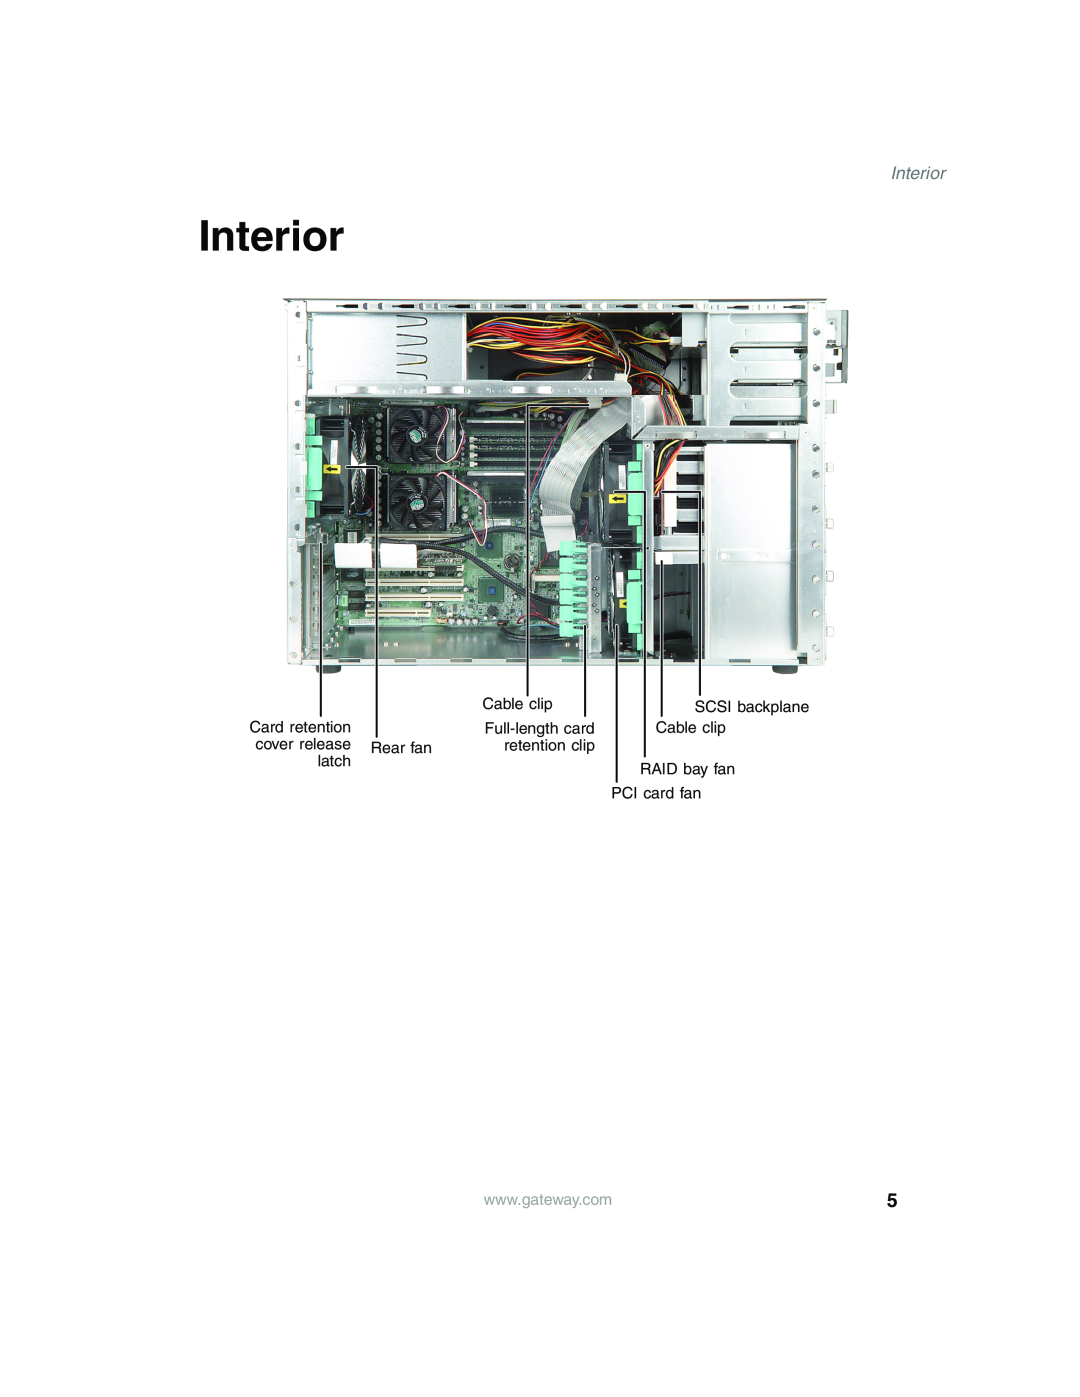 Gateway 960 manual Interior, SCSI backplane, Card retention 